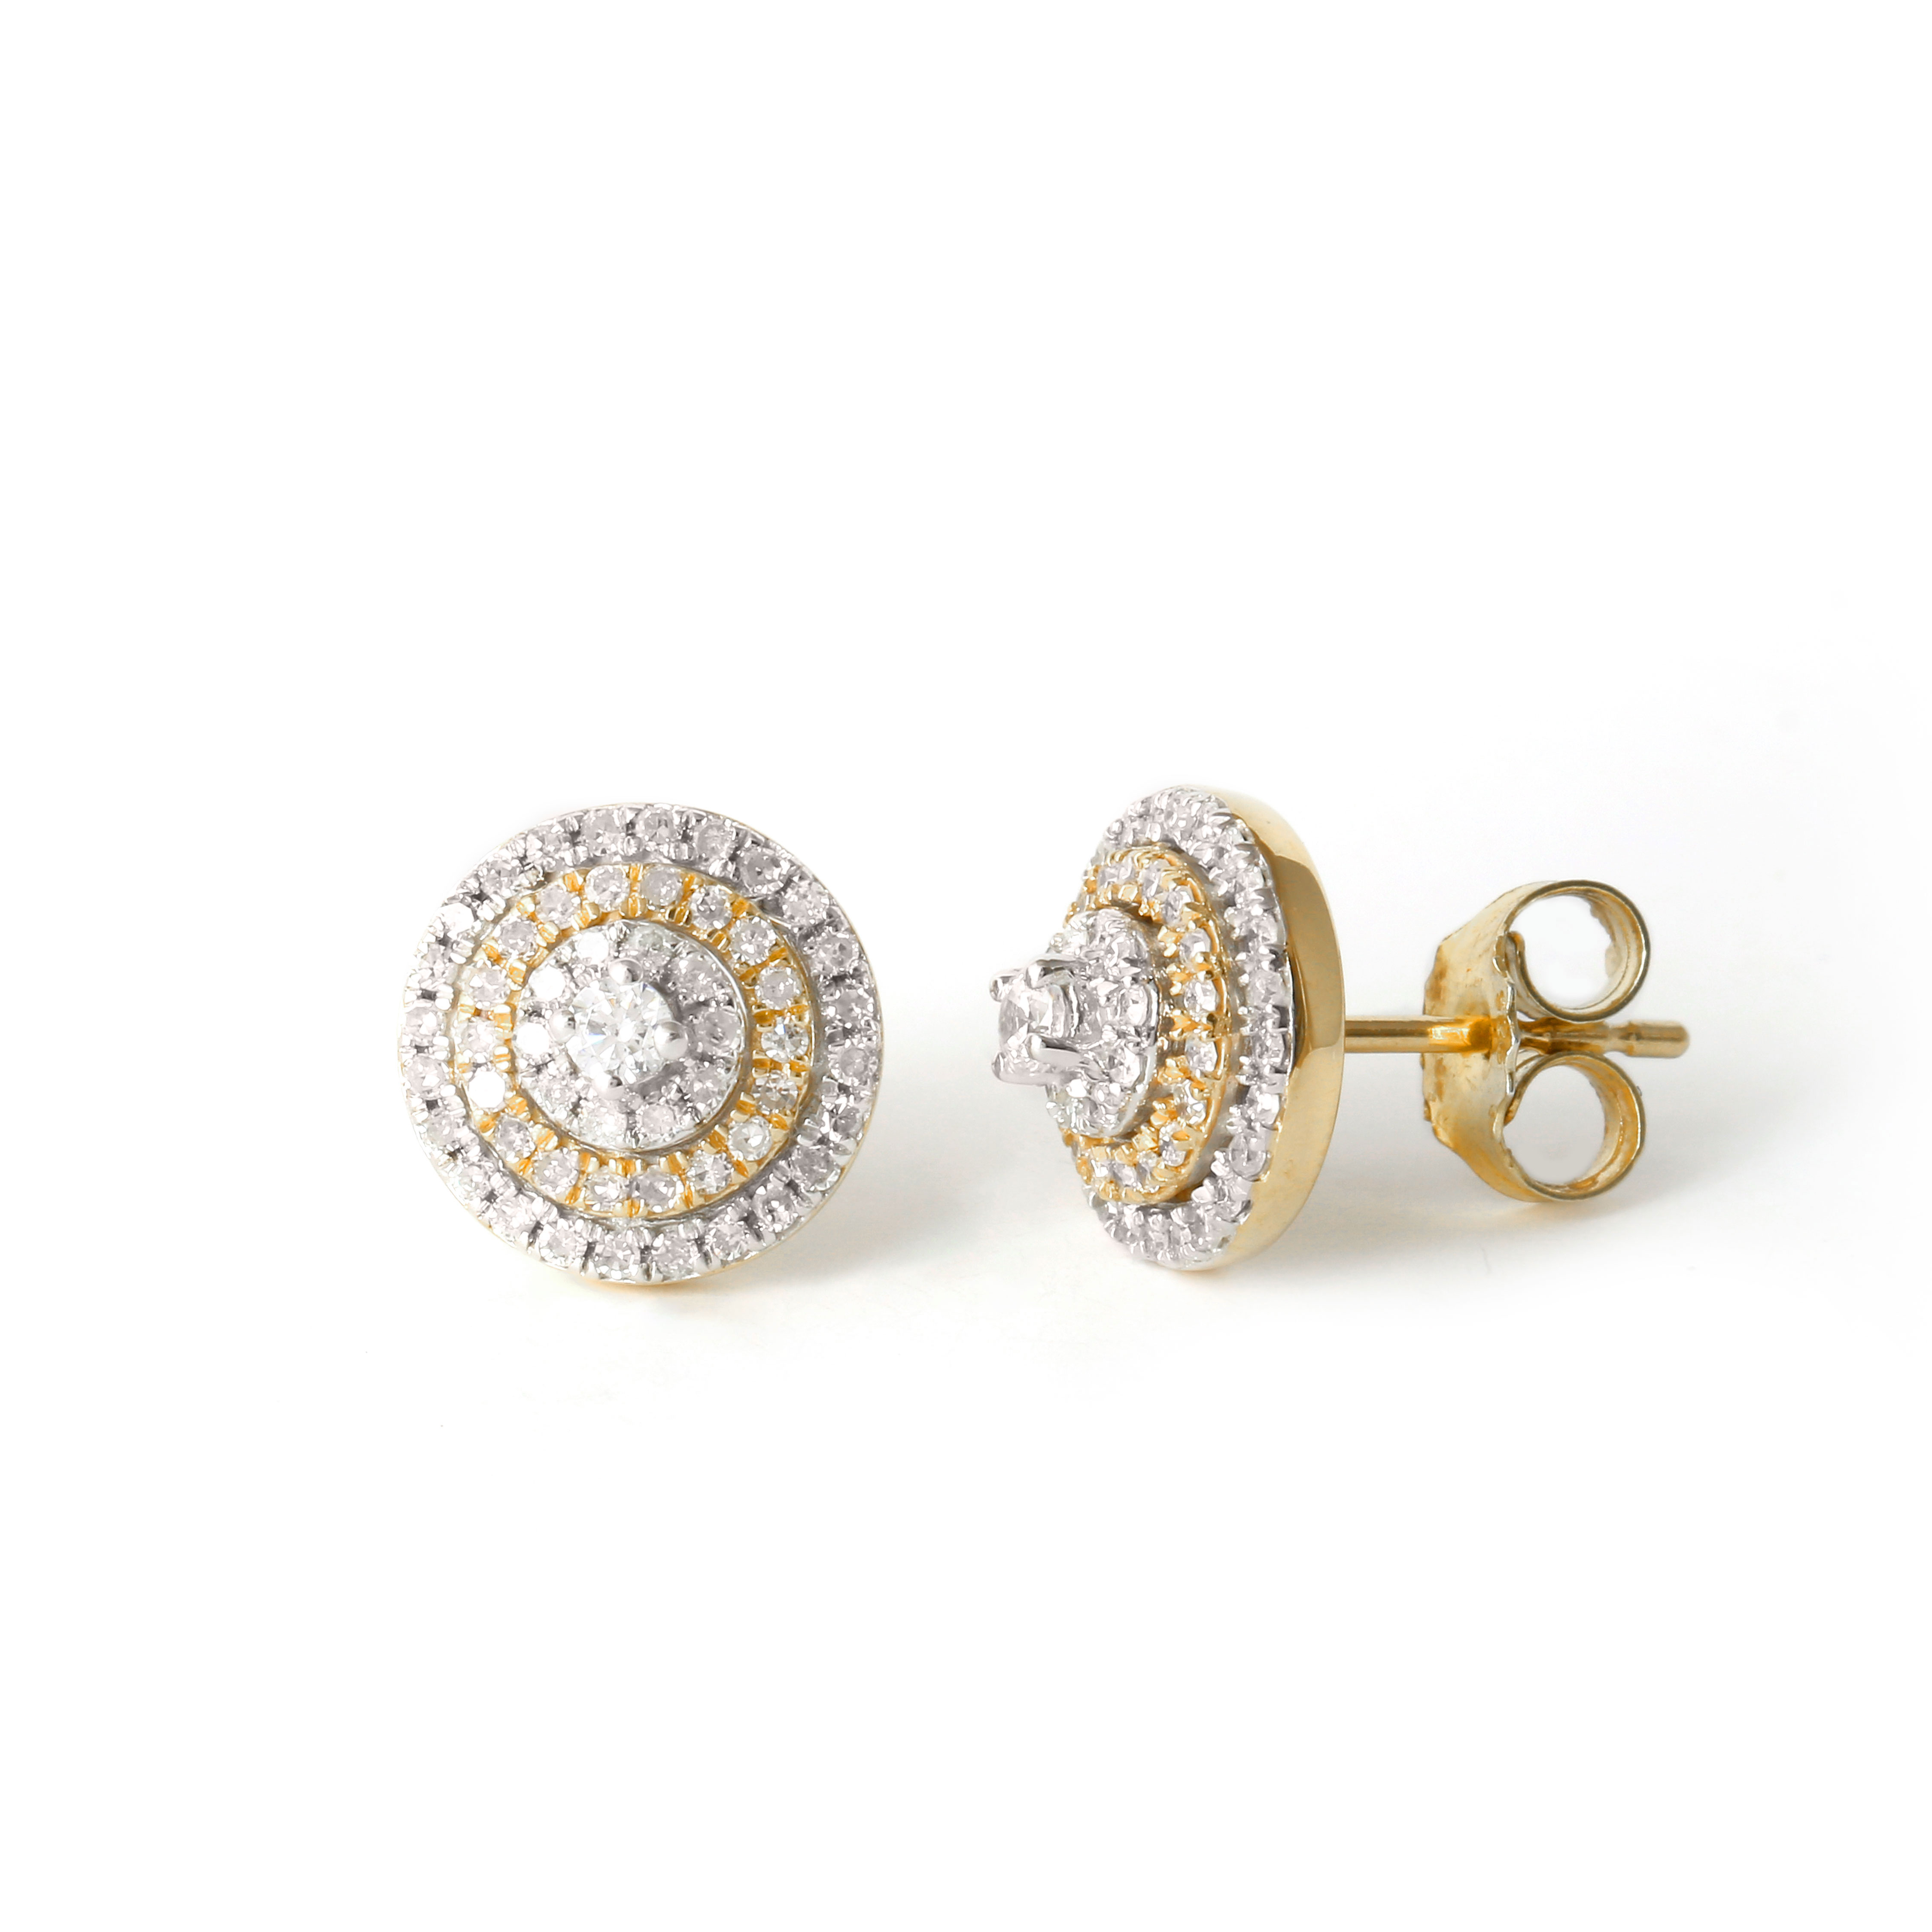 10K Yellow Gold 1/2Ct TDW Diamond Triple Halo Stud Earrings | eBay